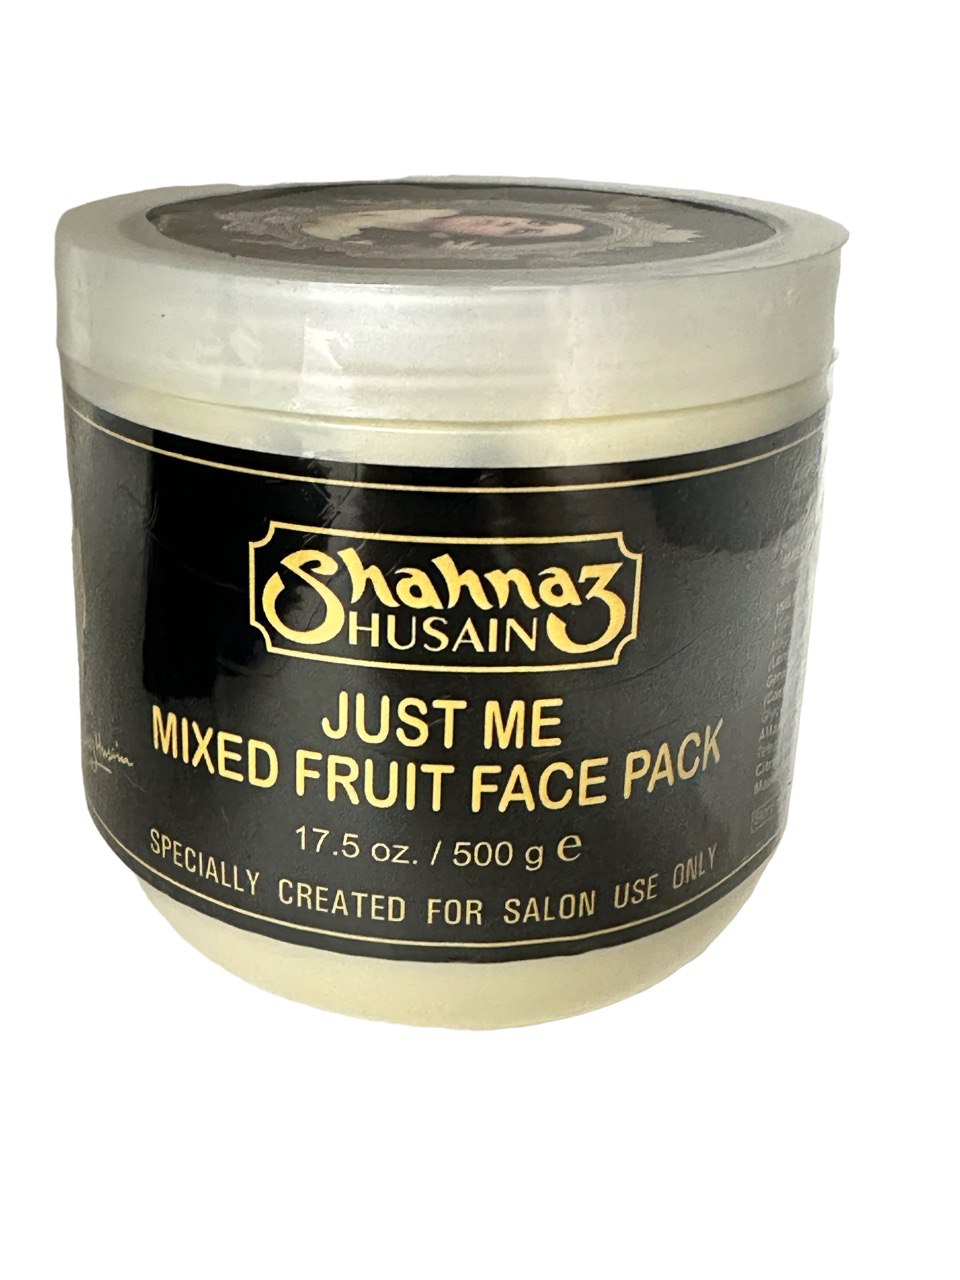 Shahnaz Husain Professional Mixed Fruit Face Pack 500g